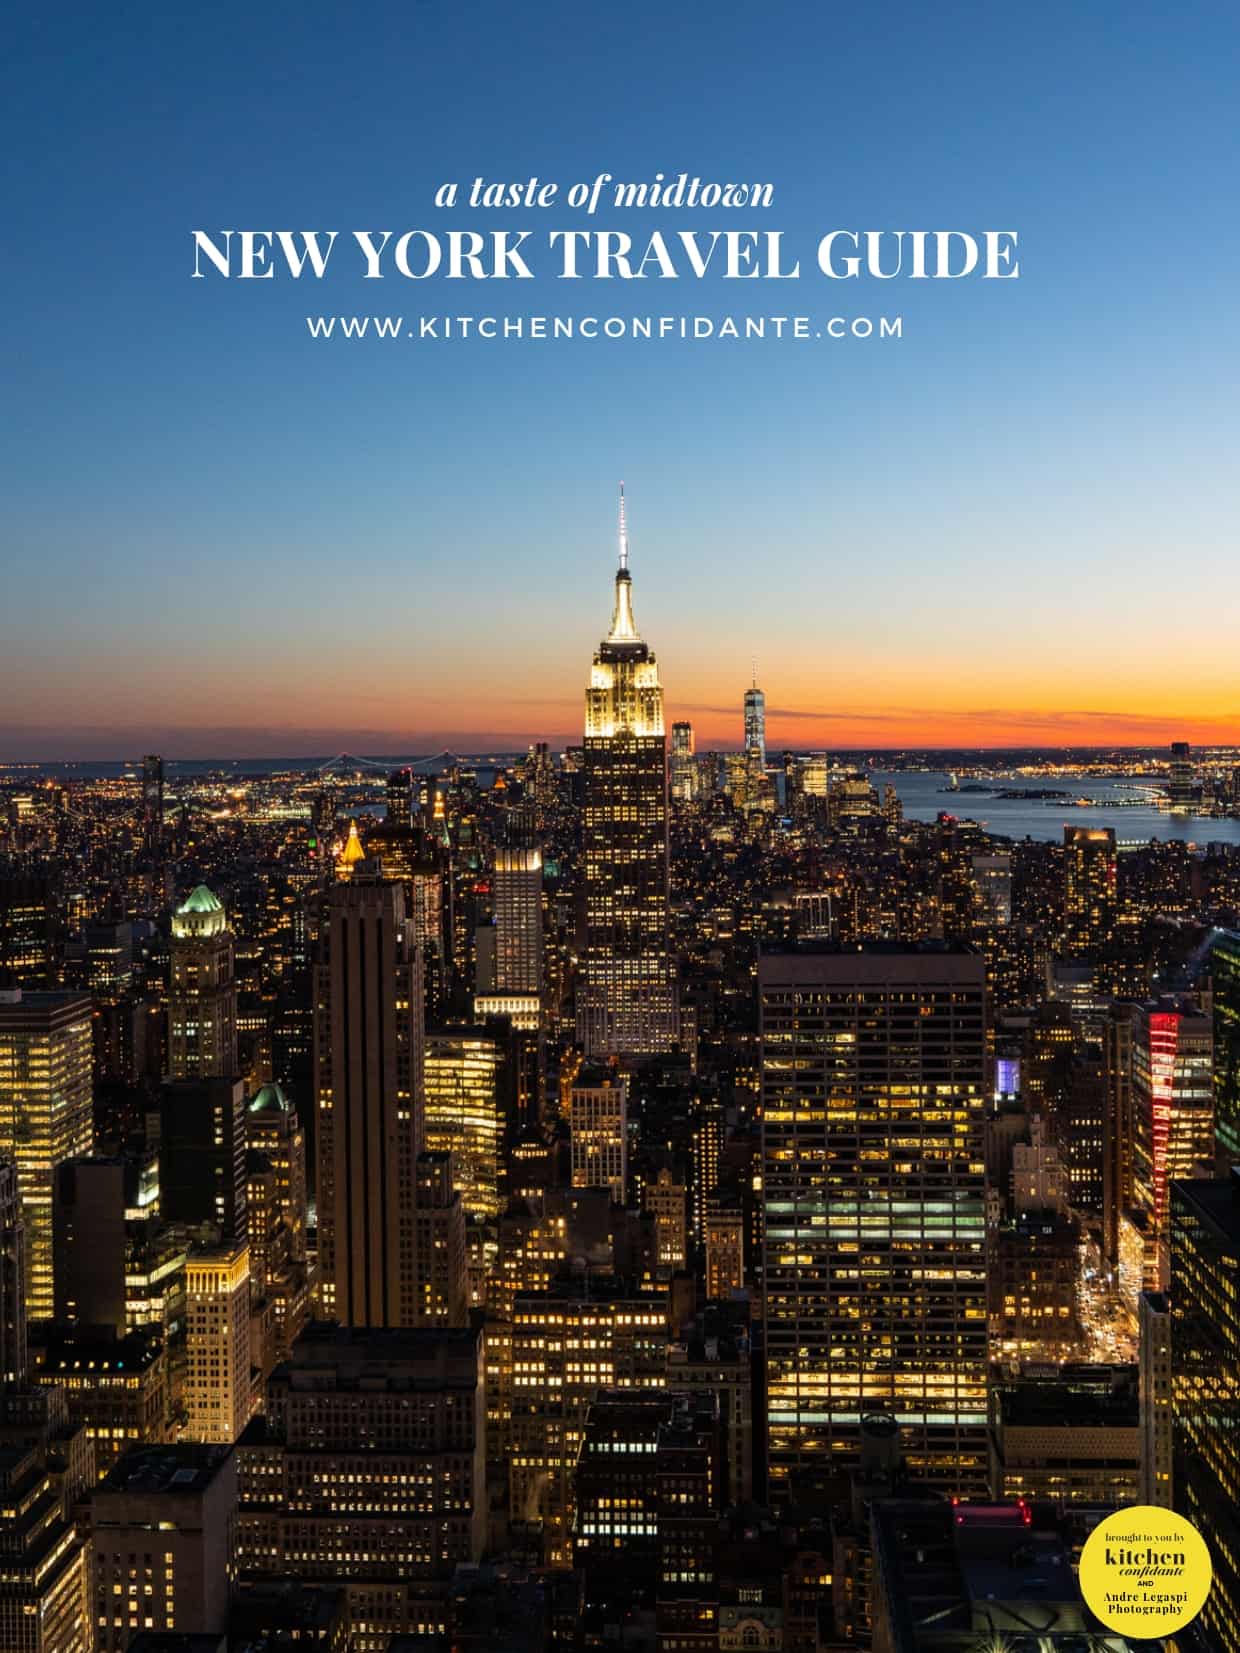 New York Travel Guide A Taste of Midtown Kitchen Confidante®